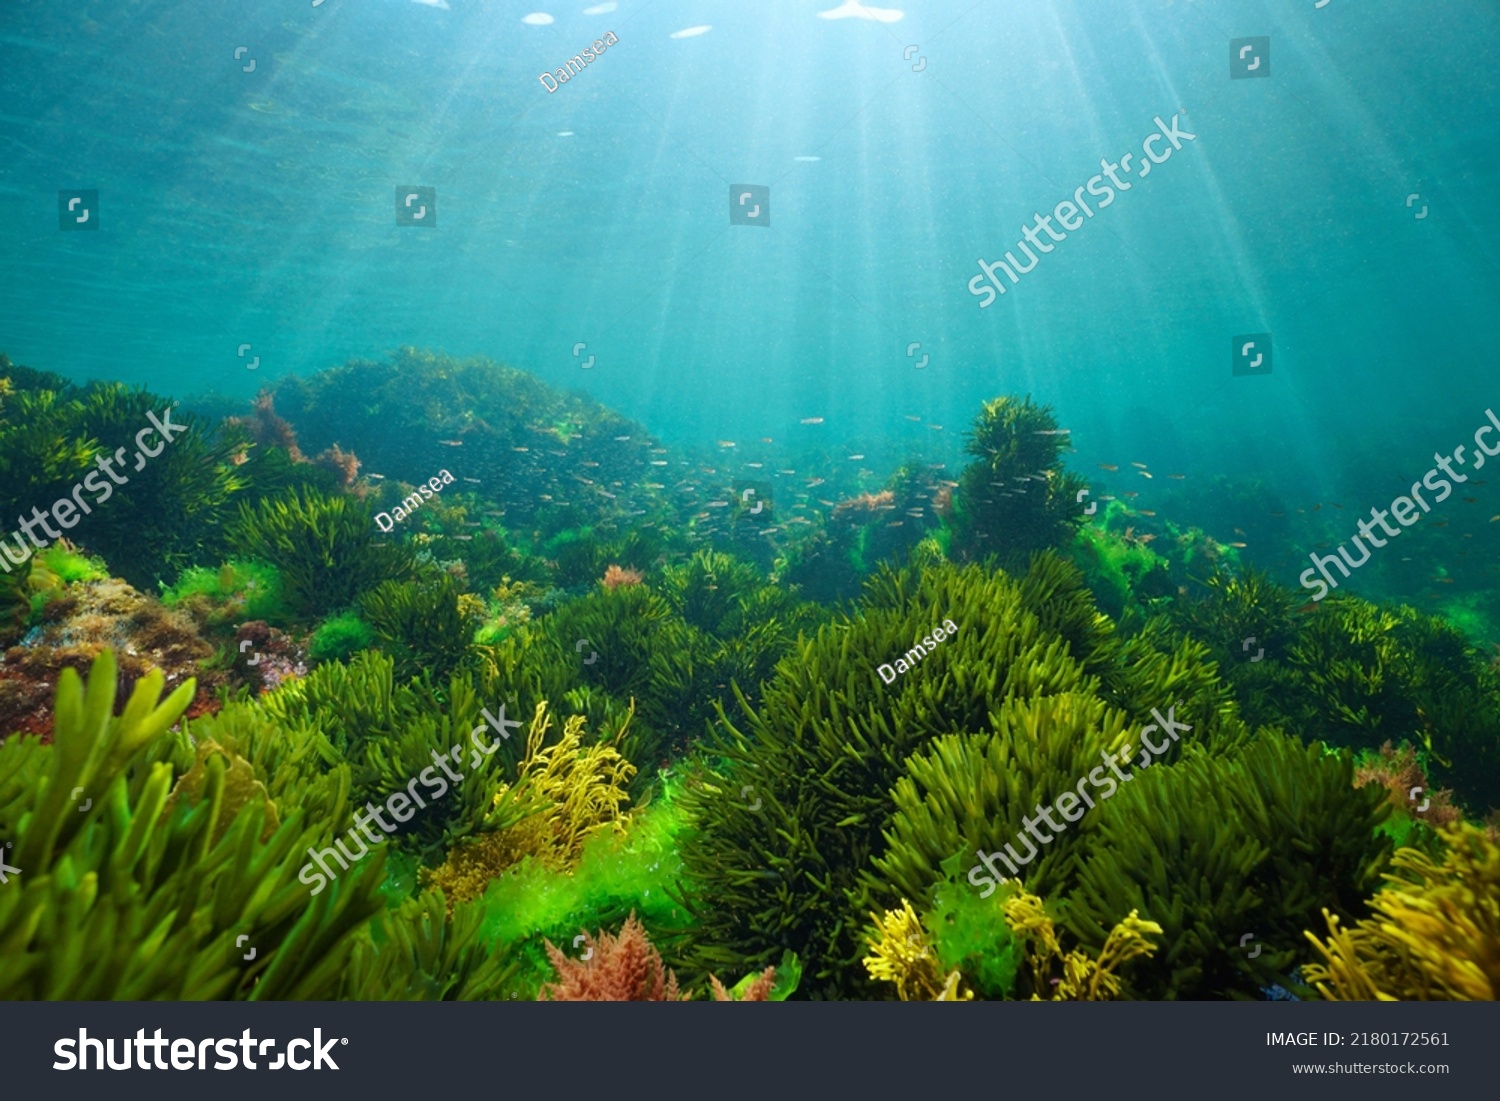 Algae on the ocean floor with natural sunlight, underwater seascape in the Atlantic ocean, Spain, Galicia #2180172561